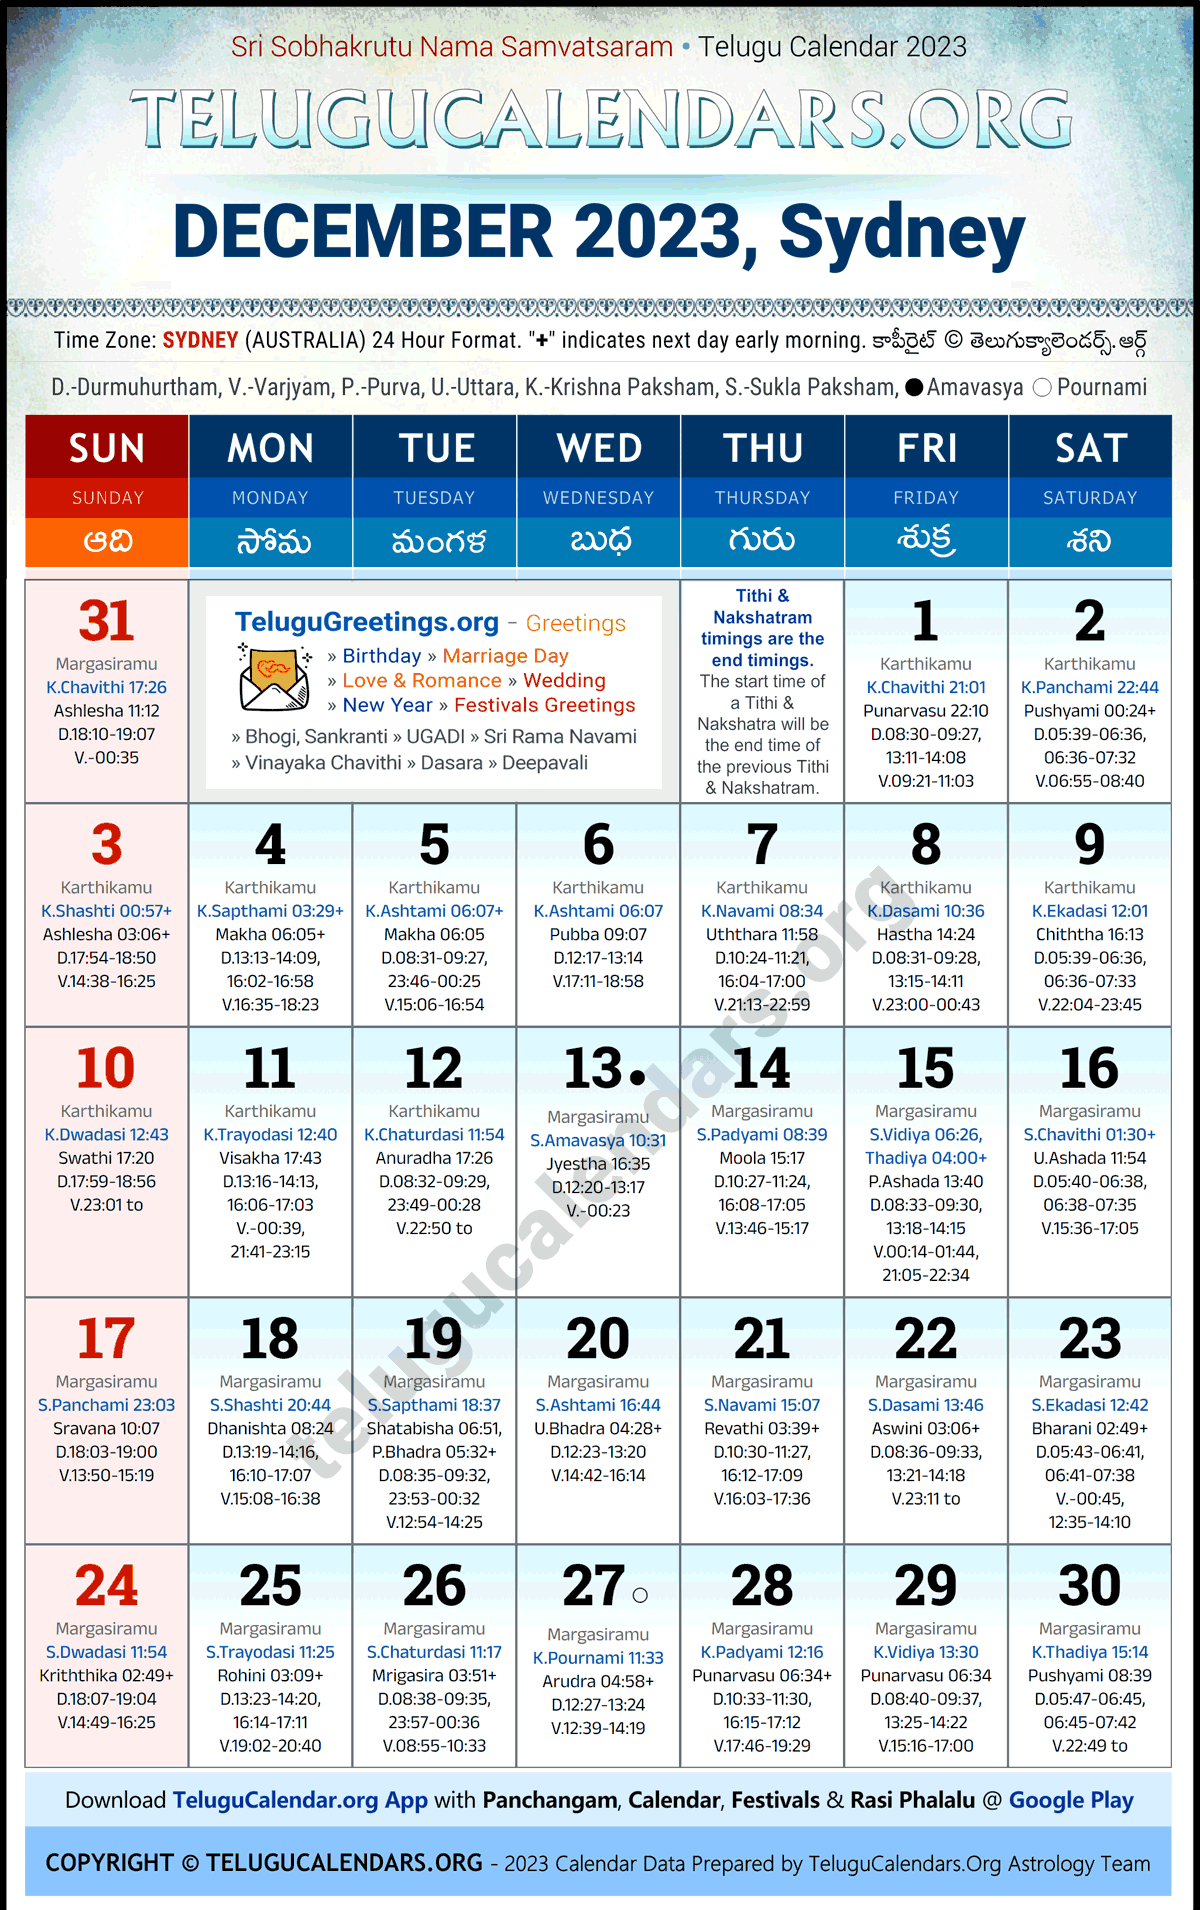 Telugu Calendar 2023 December Festivals for Sydney